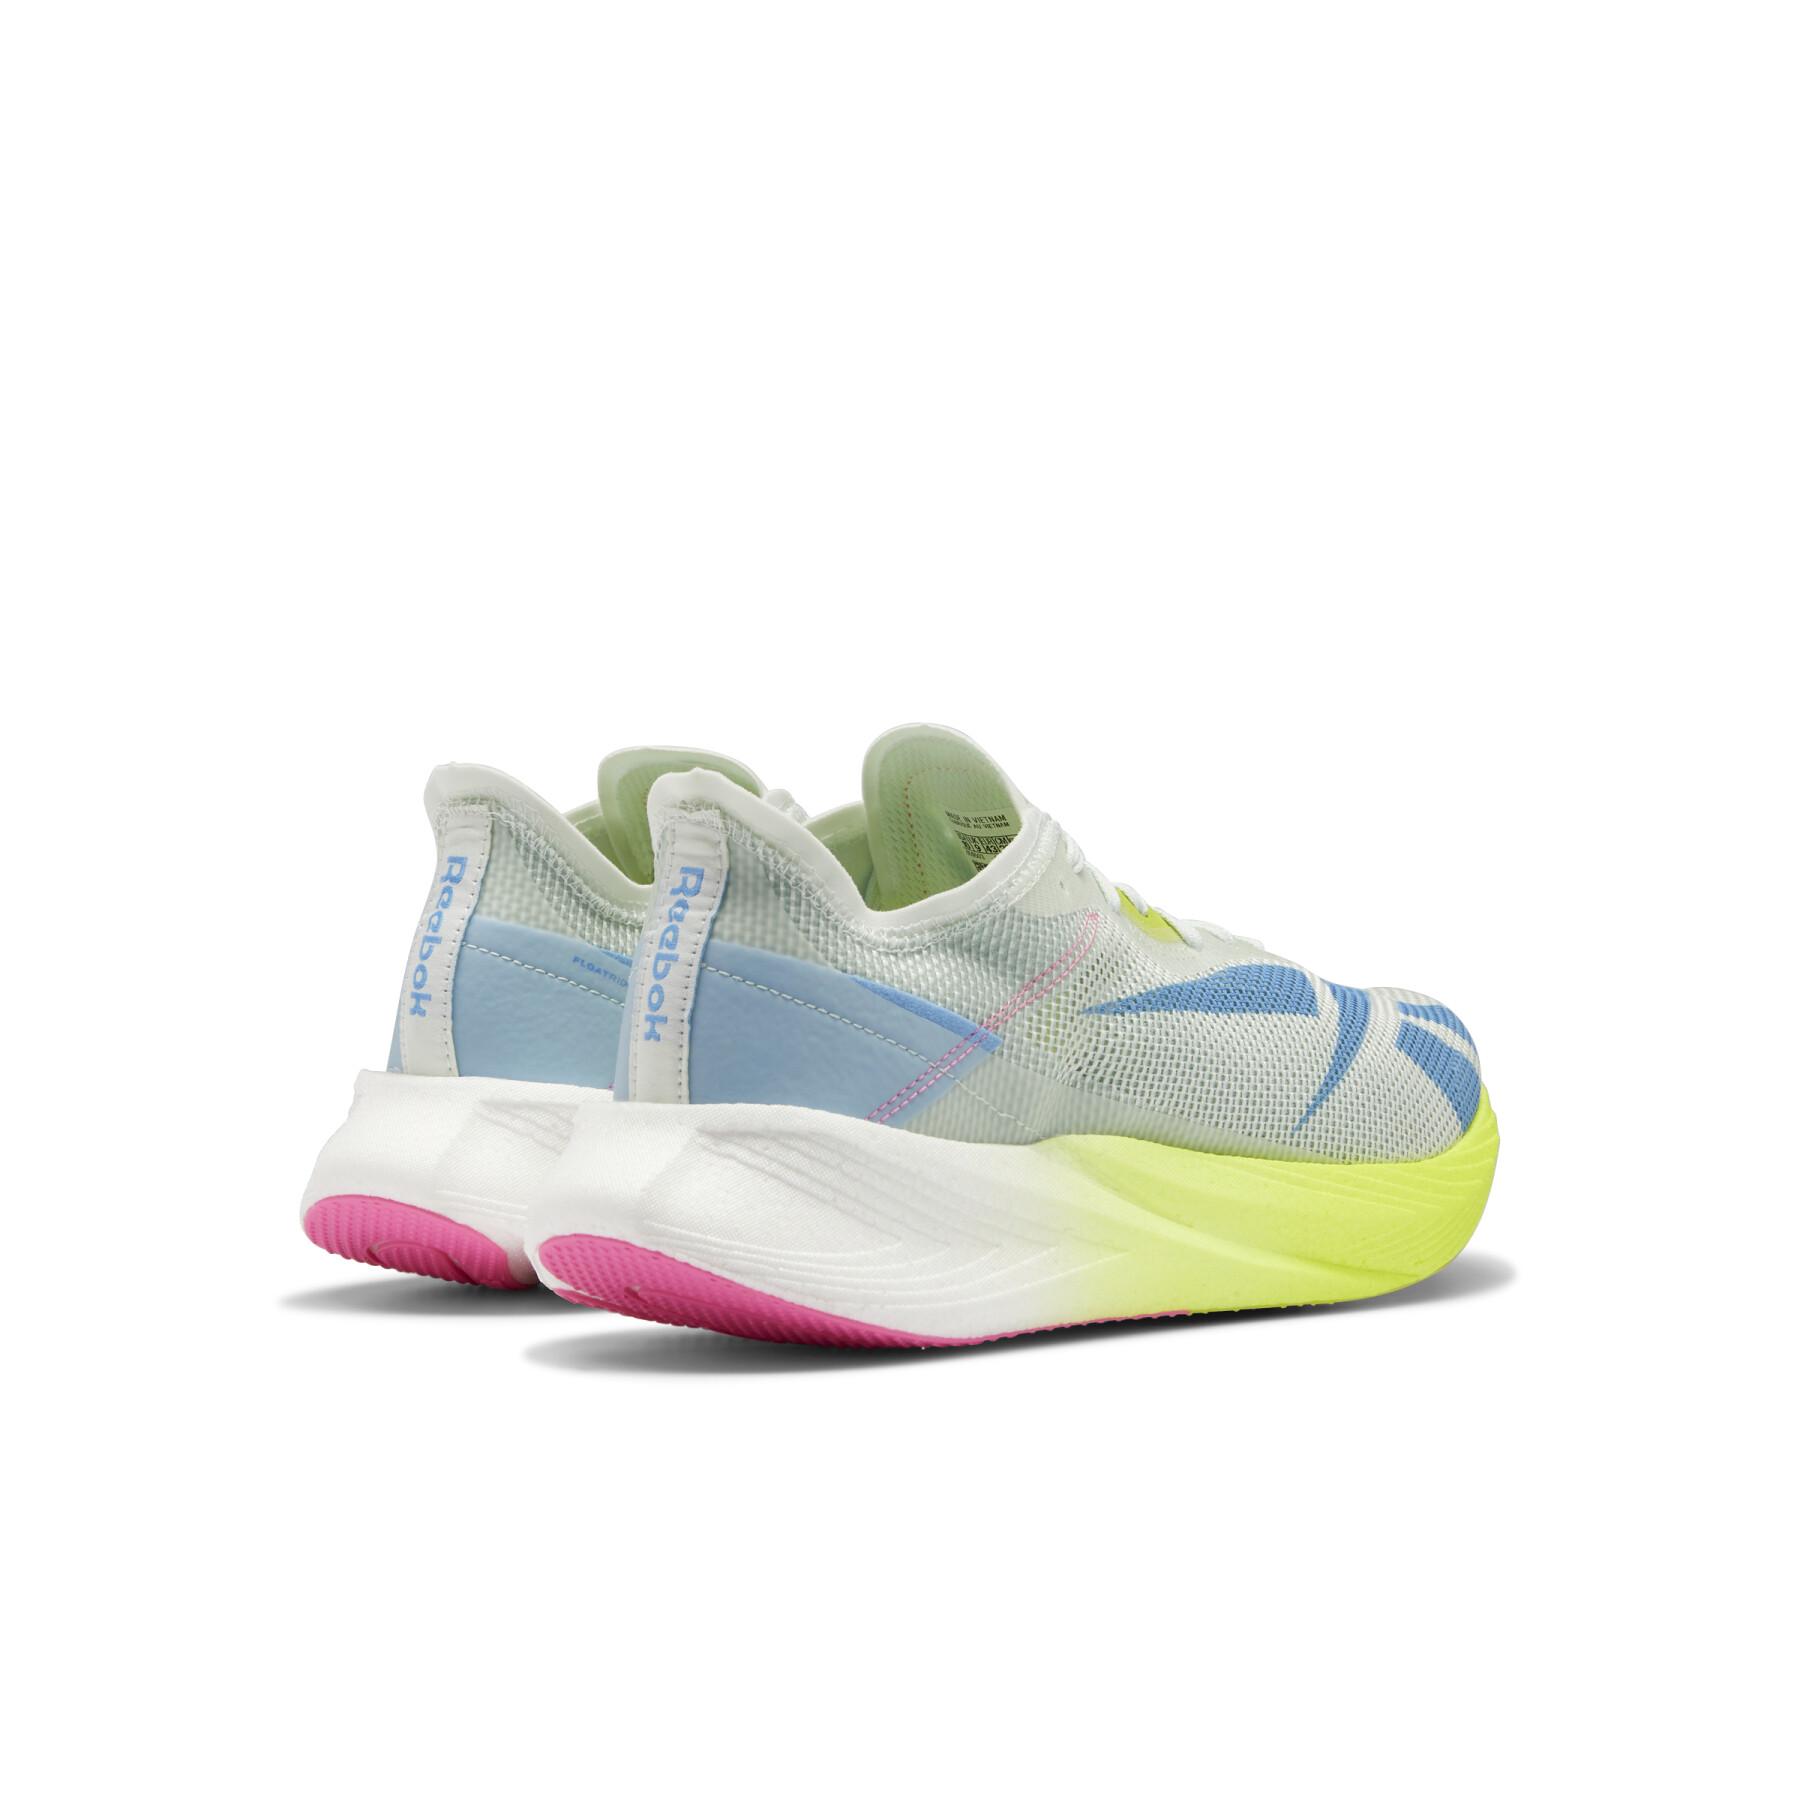 Sapatos Reebok Floatride Energy X